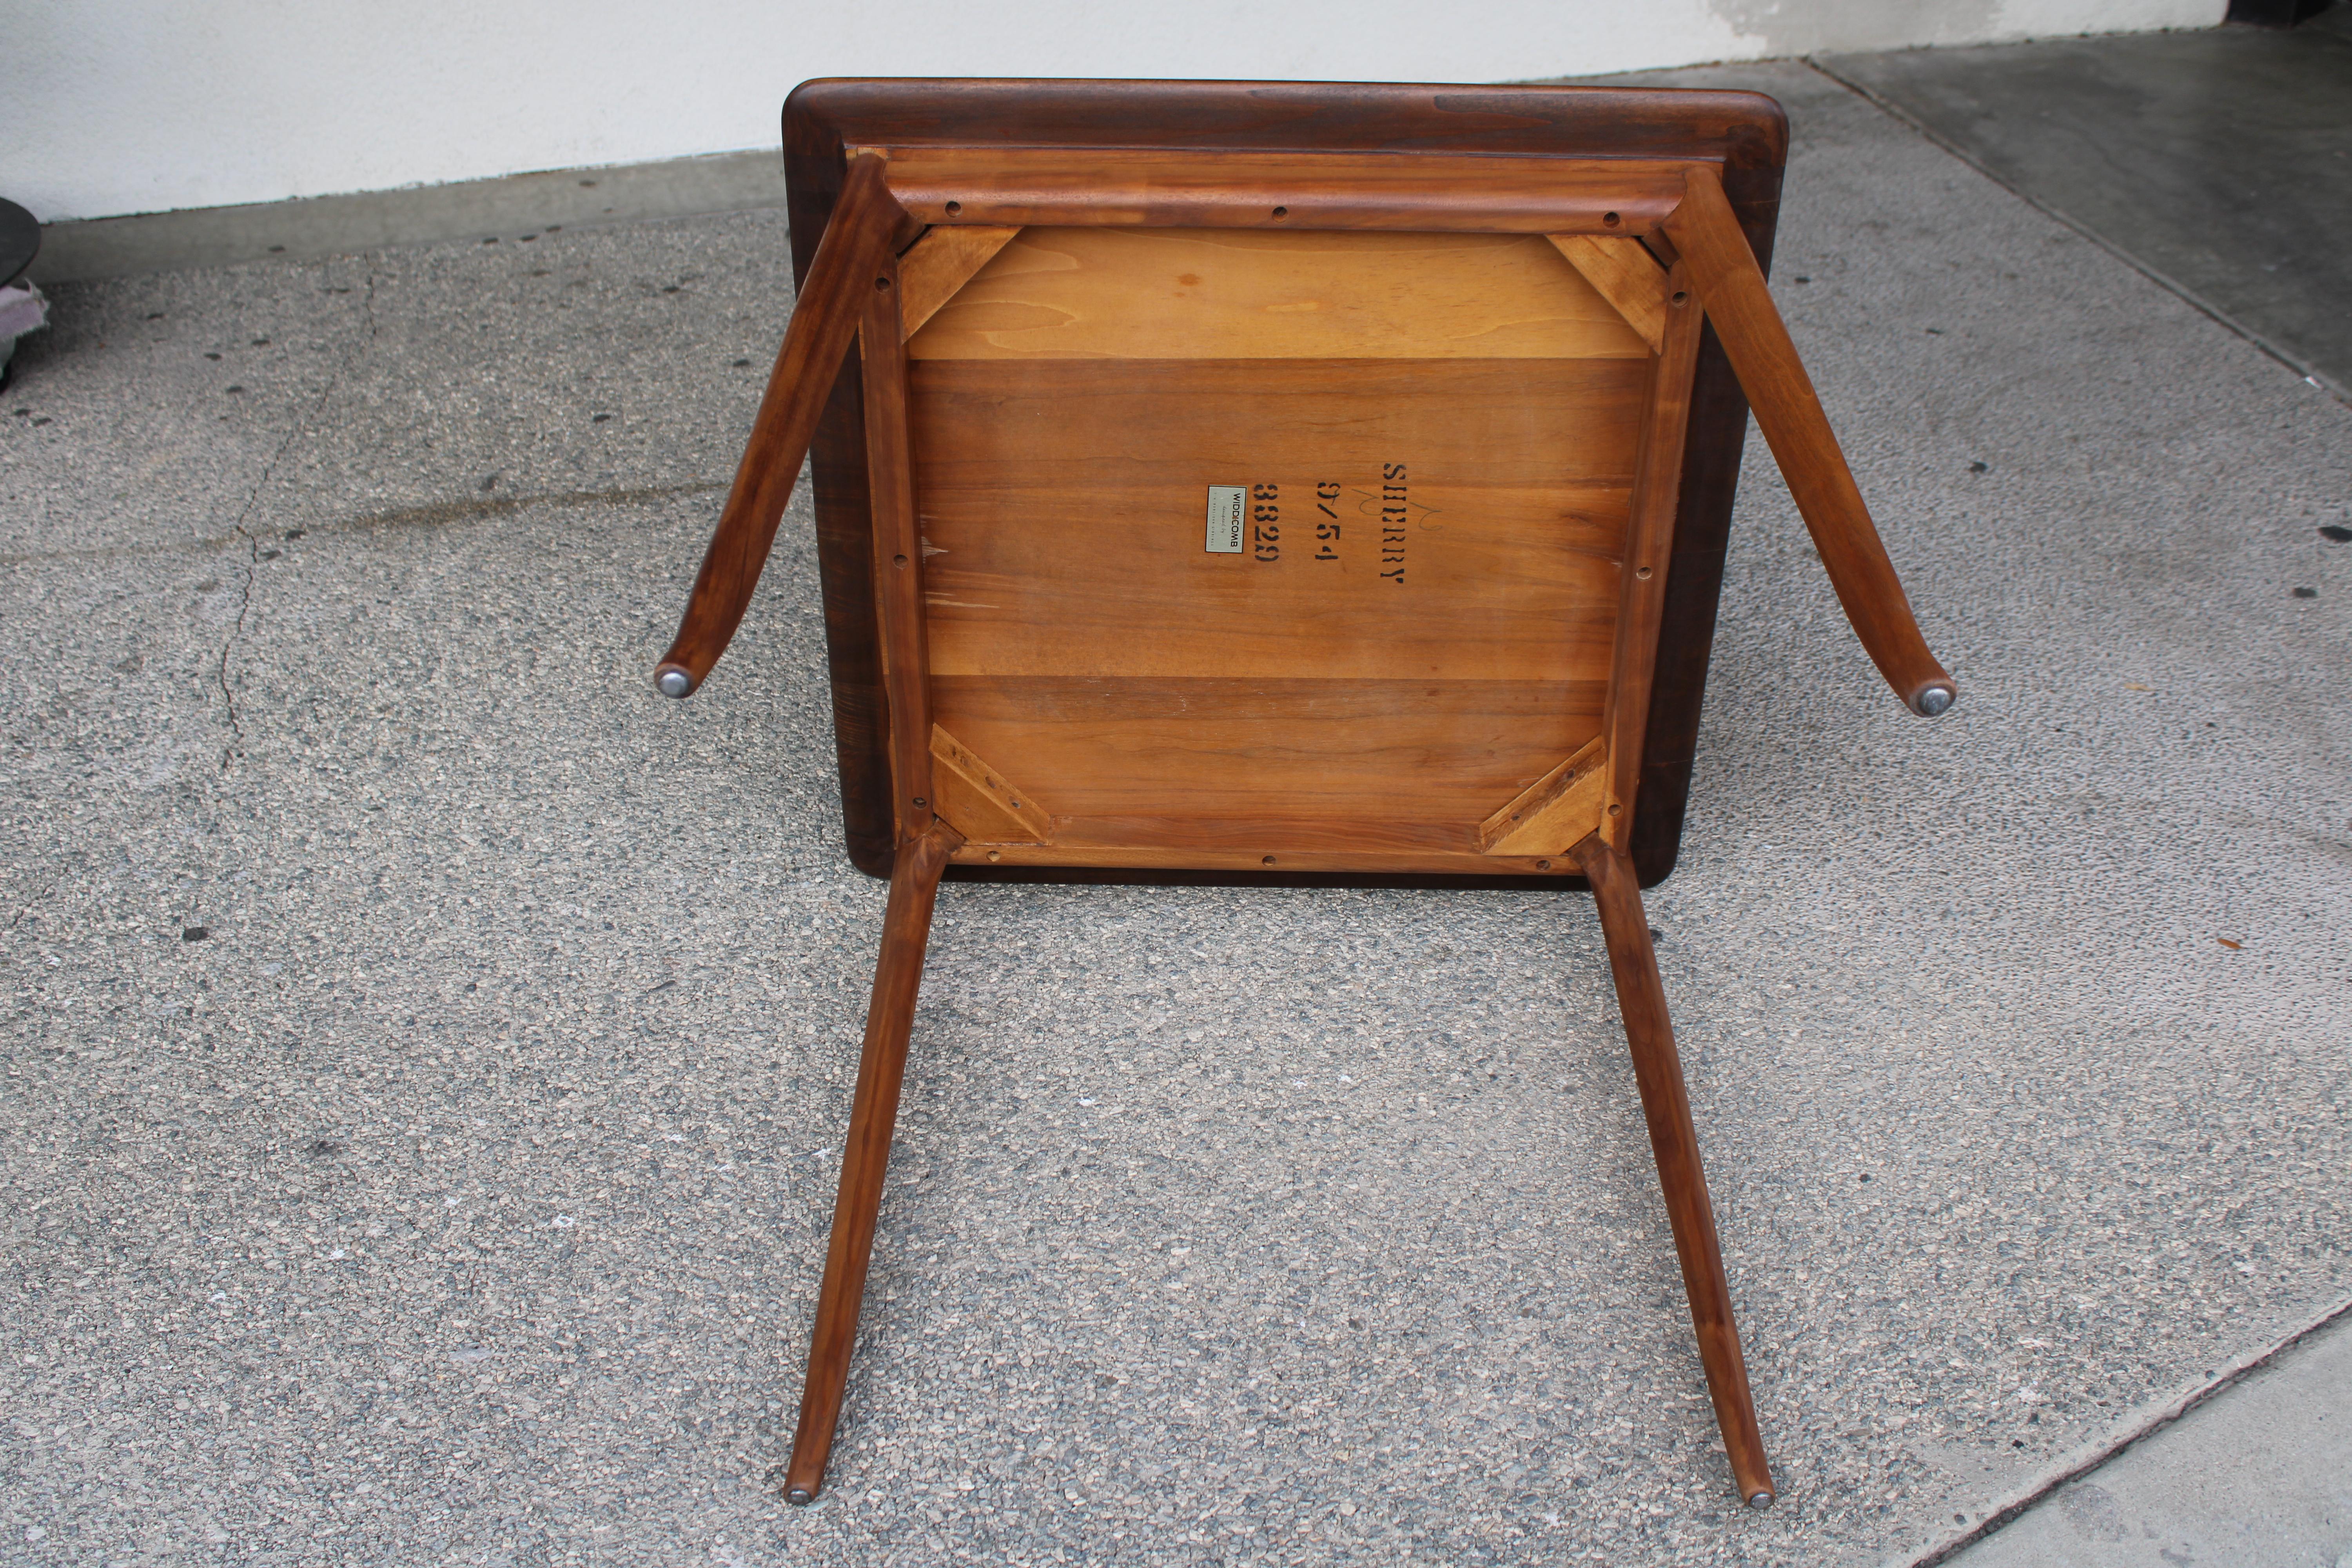 Mid-20th Century Widdicomb Table Designed by T.H. Robsjohn - Gibbings For Sale